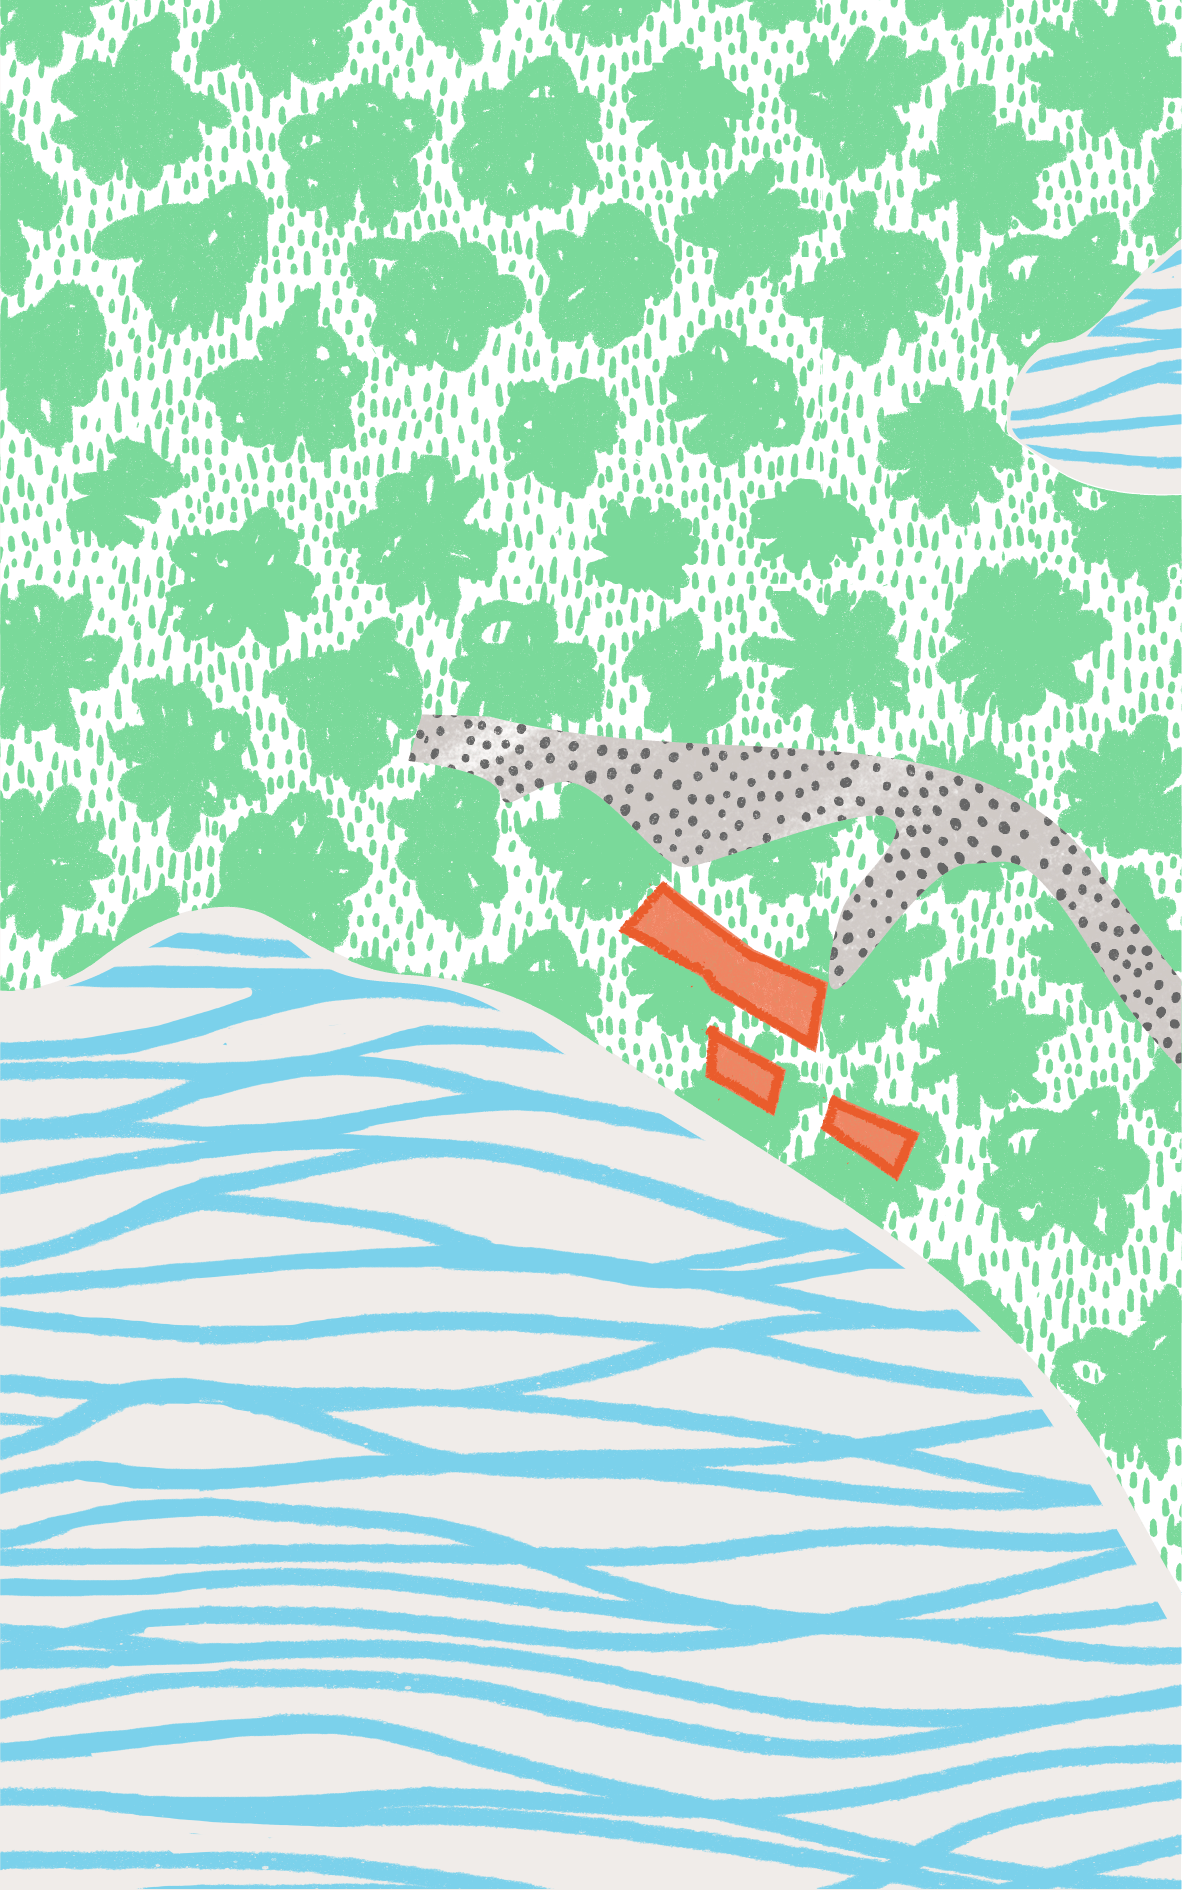 Rautulampi architecture and landscape illustration.